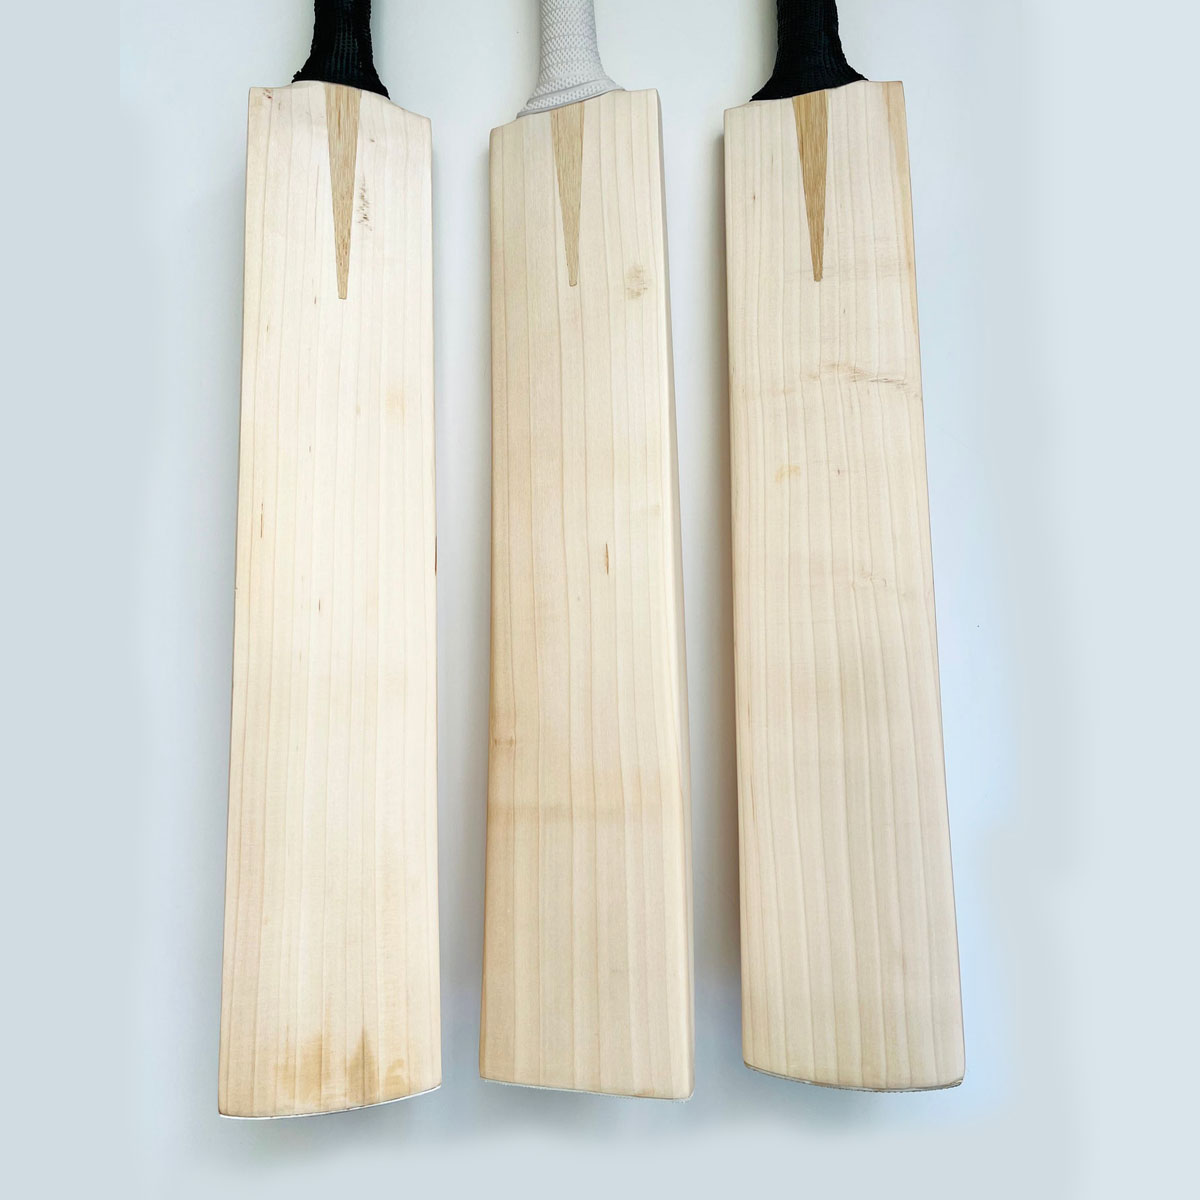 Details about   Custom Made Plain English Willow Short Handle Cricket Bat 